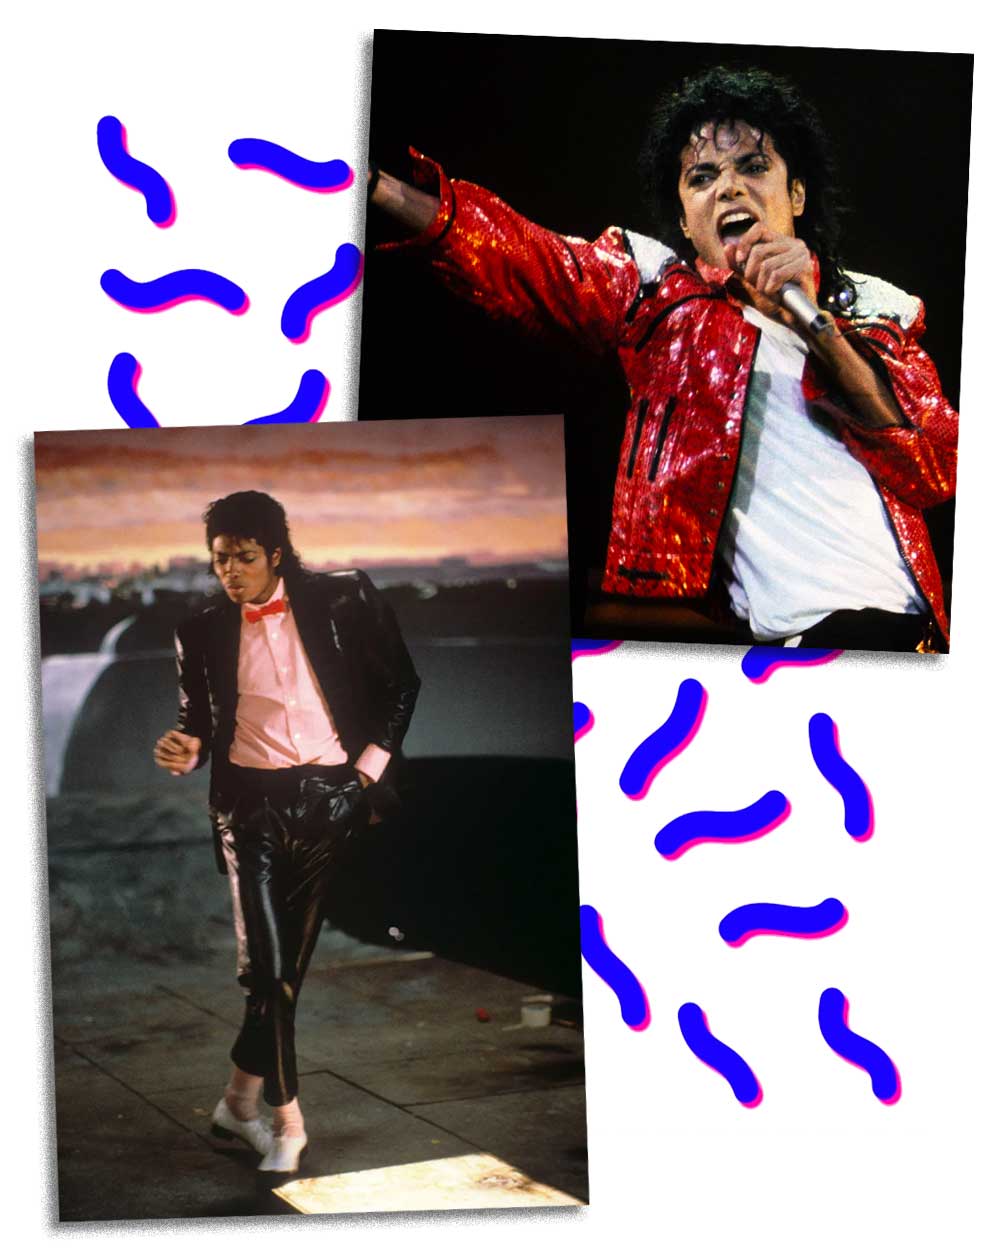 Michael Jackson Influenced the 80s Fashion